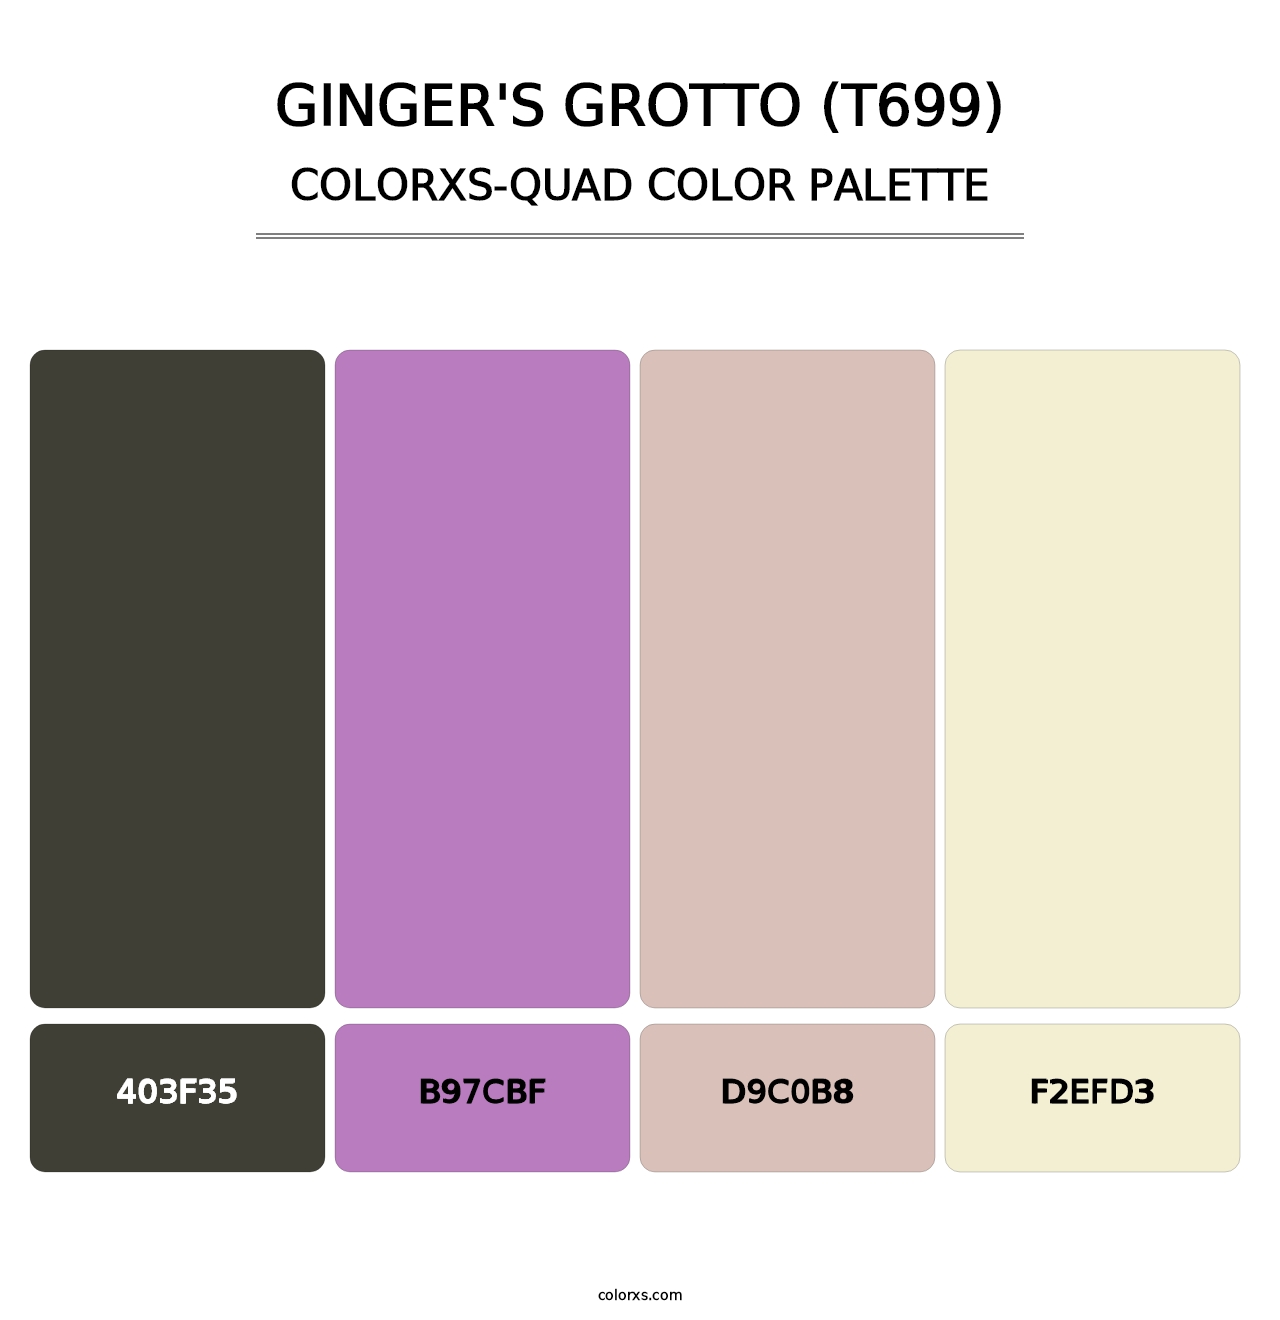 Ginger's Grotto (T699) - Colorxs Quad Palette